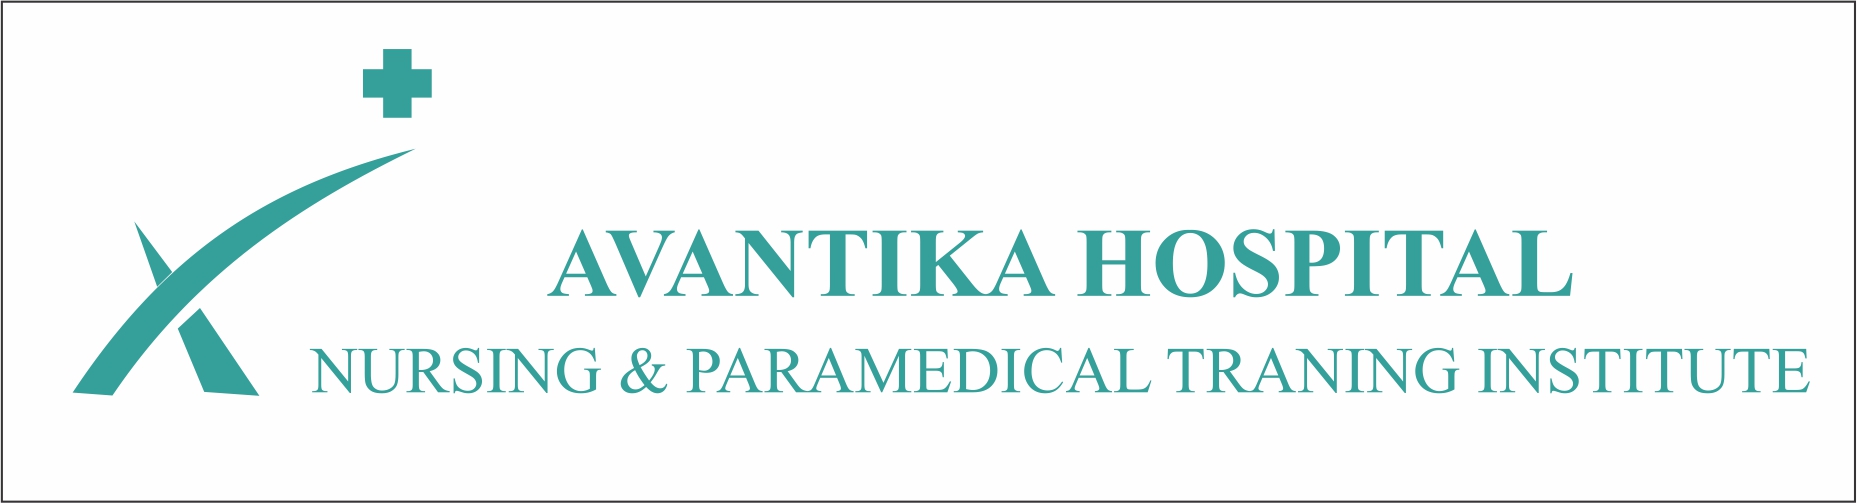 Avantika Multispeciality Hospital|Hospitals|Medical Services